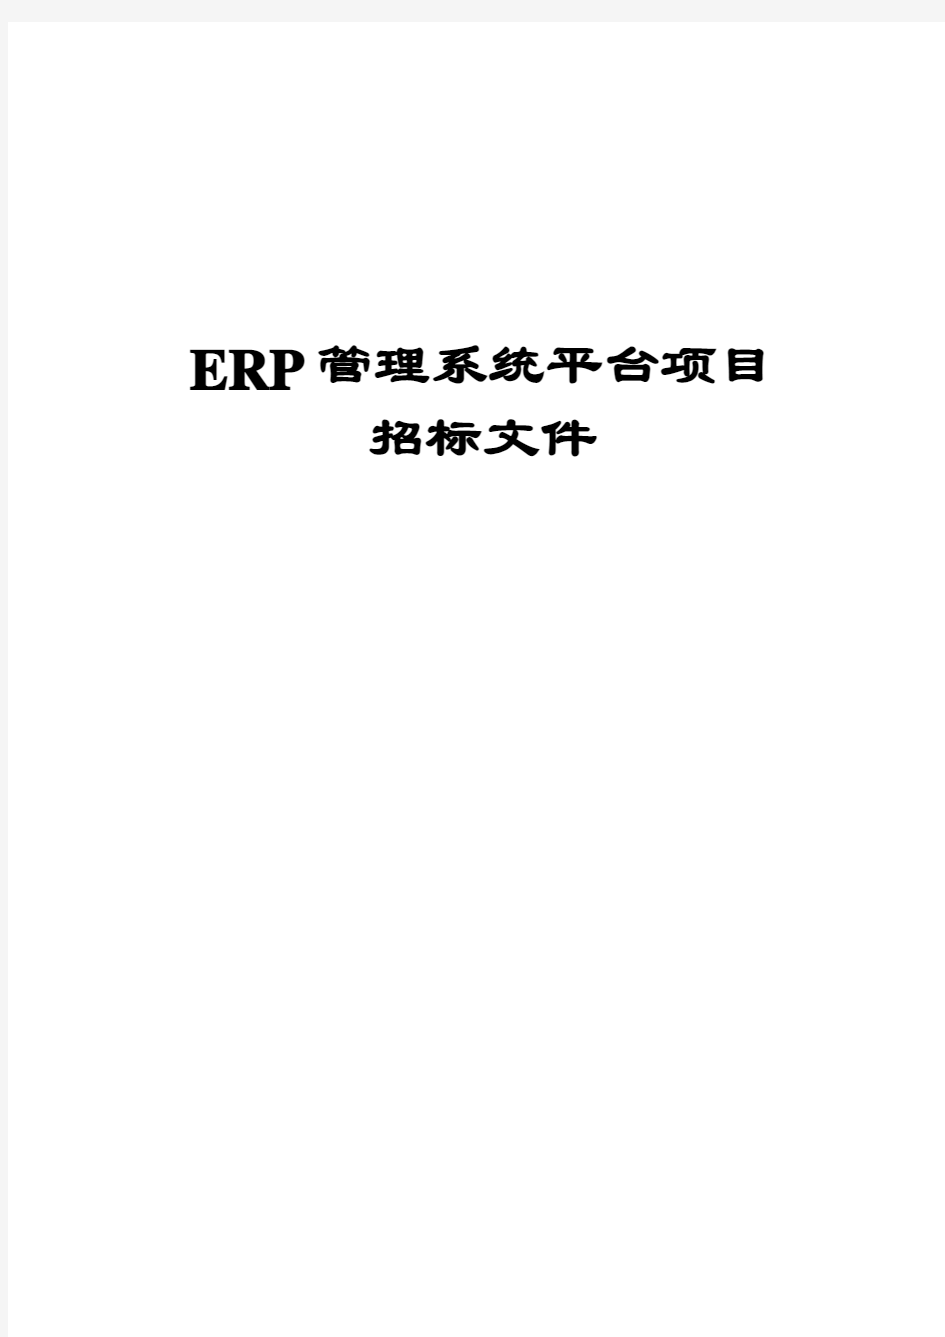 ERP管理系统平台项目招标文件